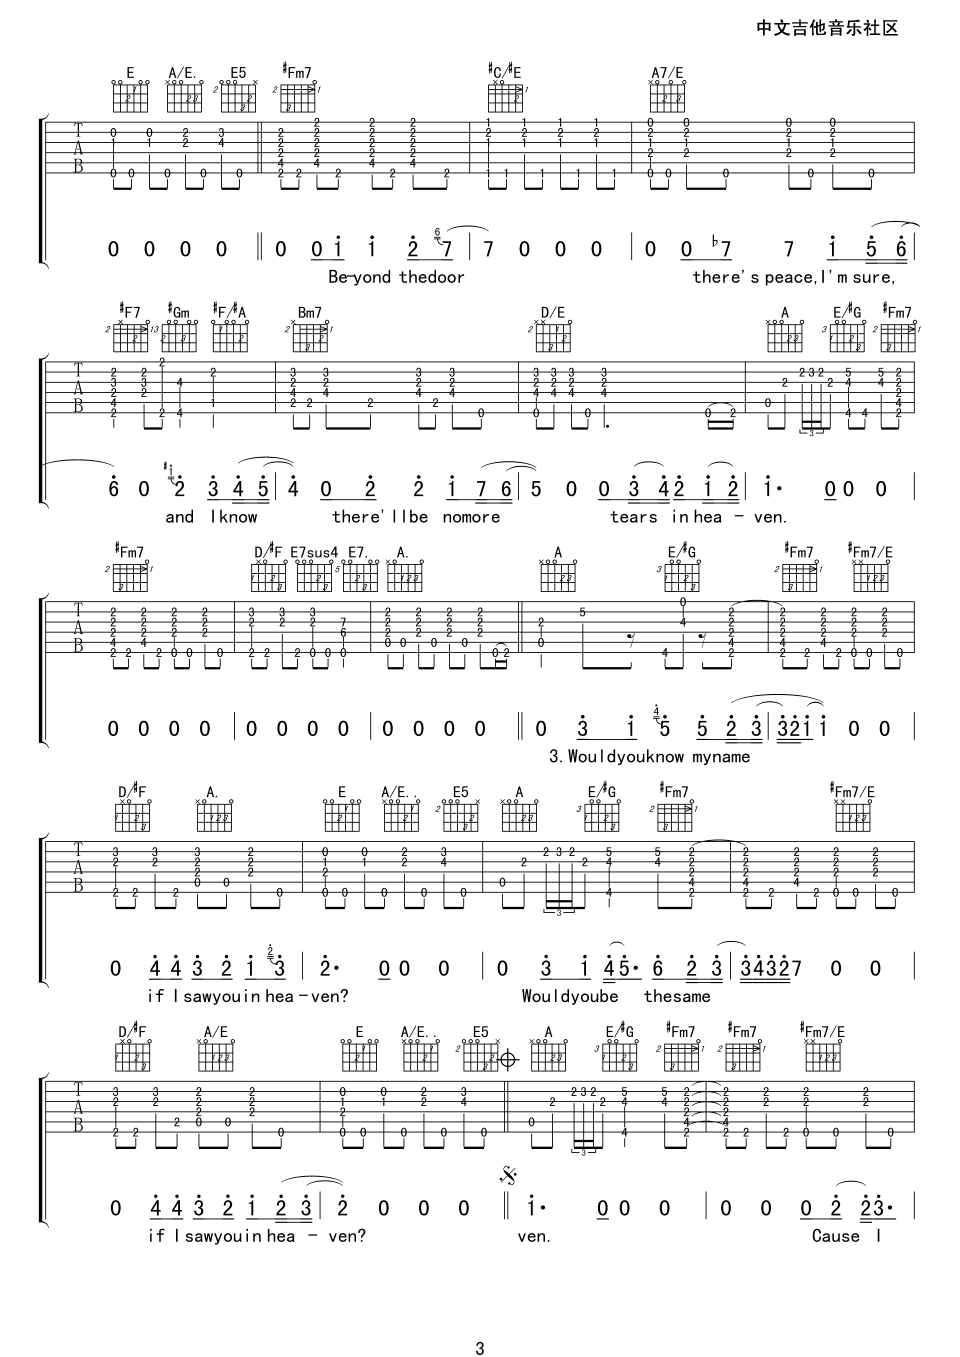 tearsinheaven吉他谱第(3)页